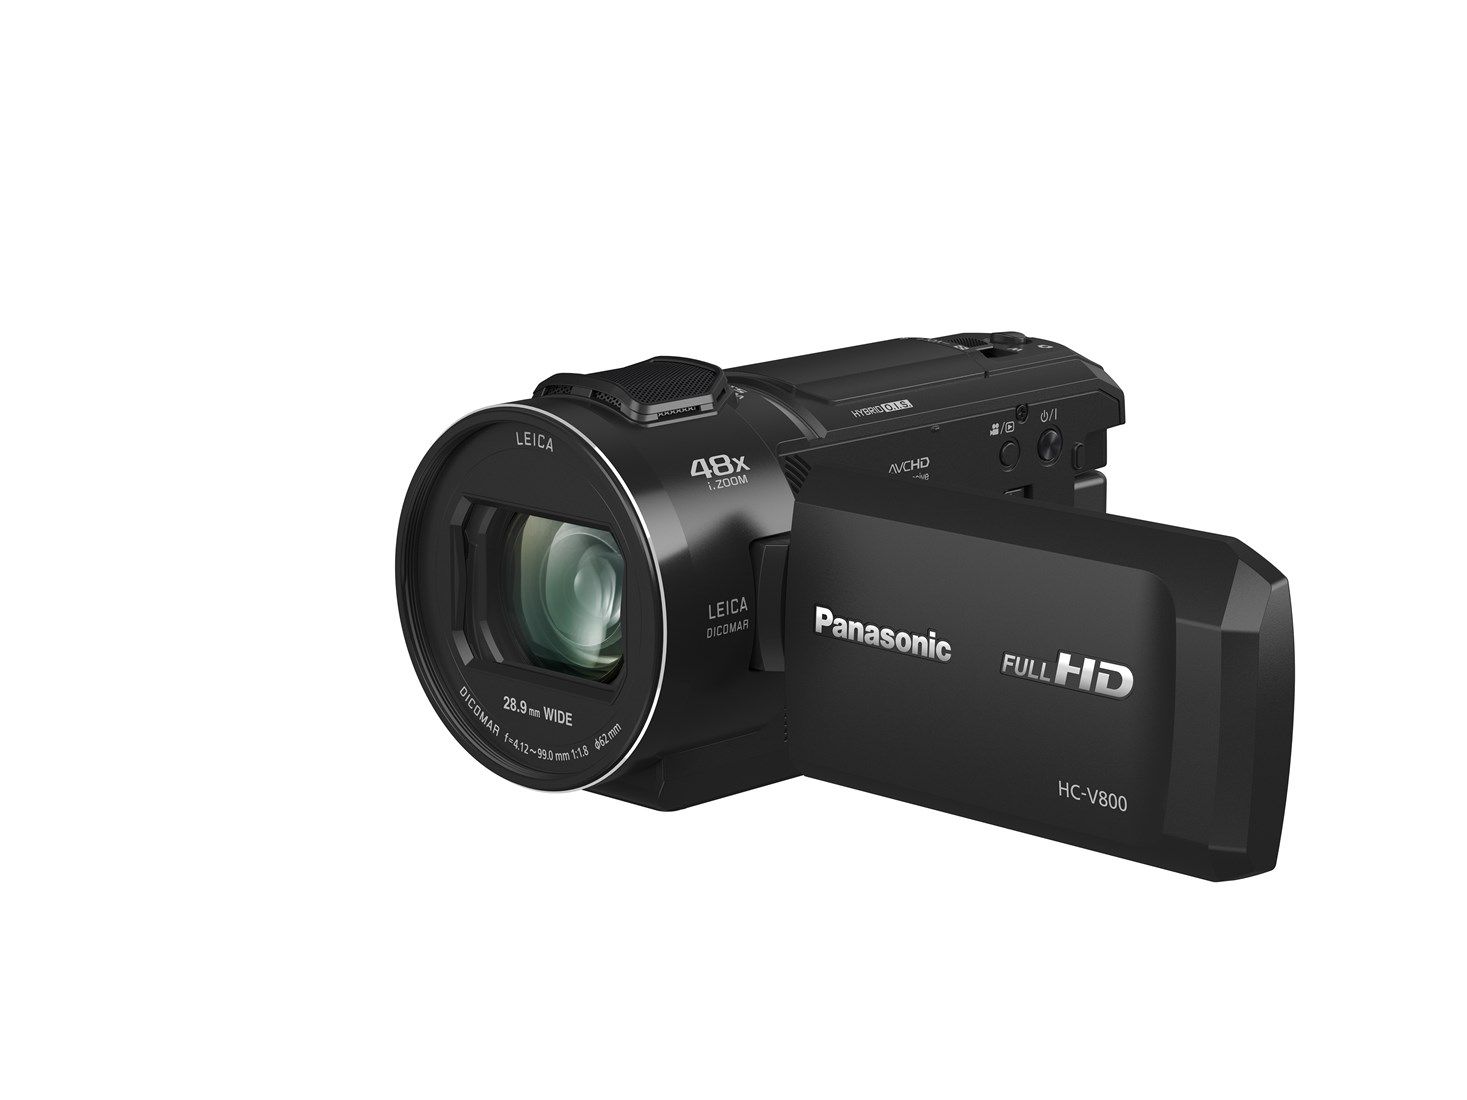 Product Image of Panasonic Lumix HD HC-V800 HD Camcorder